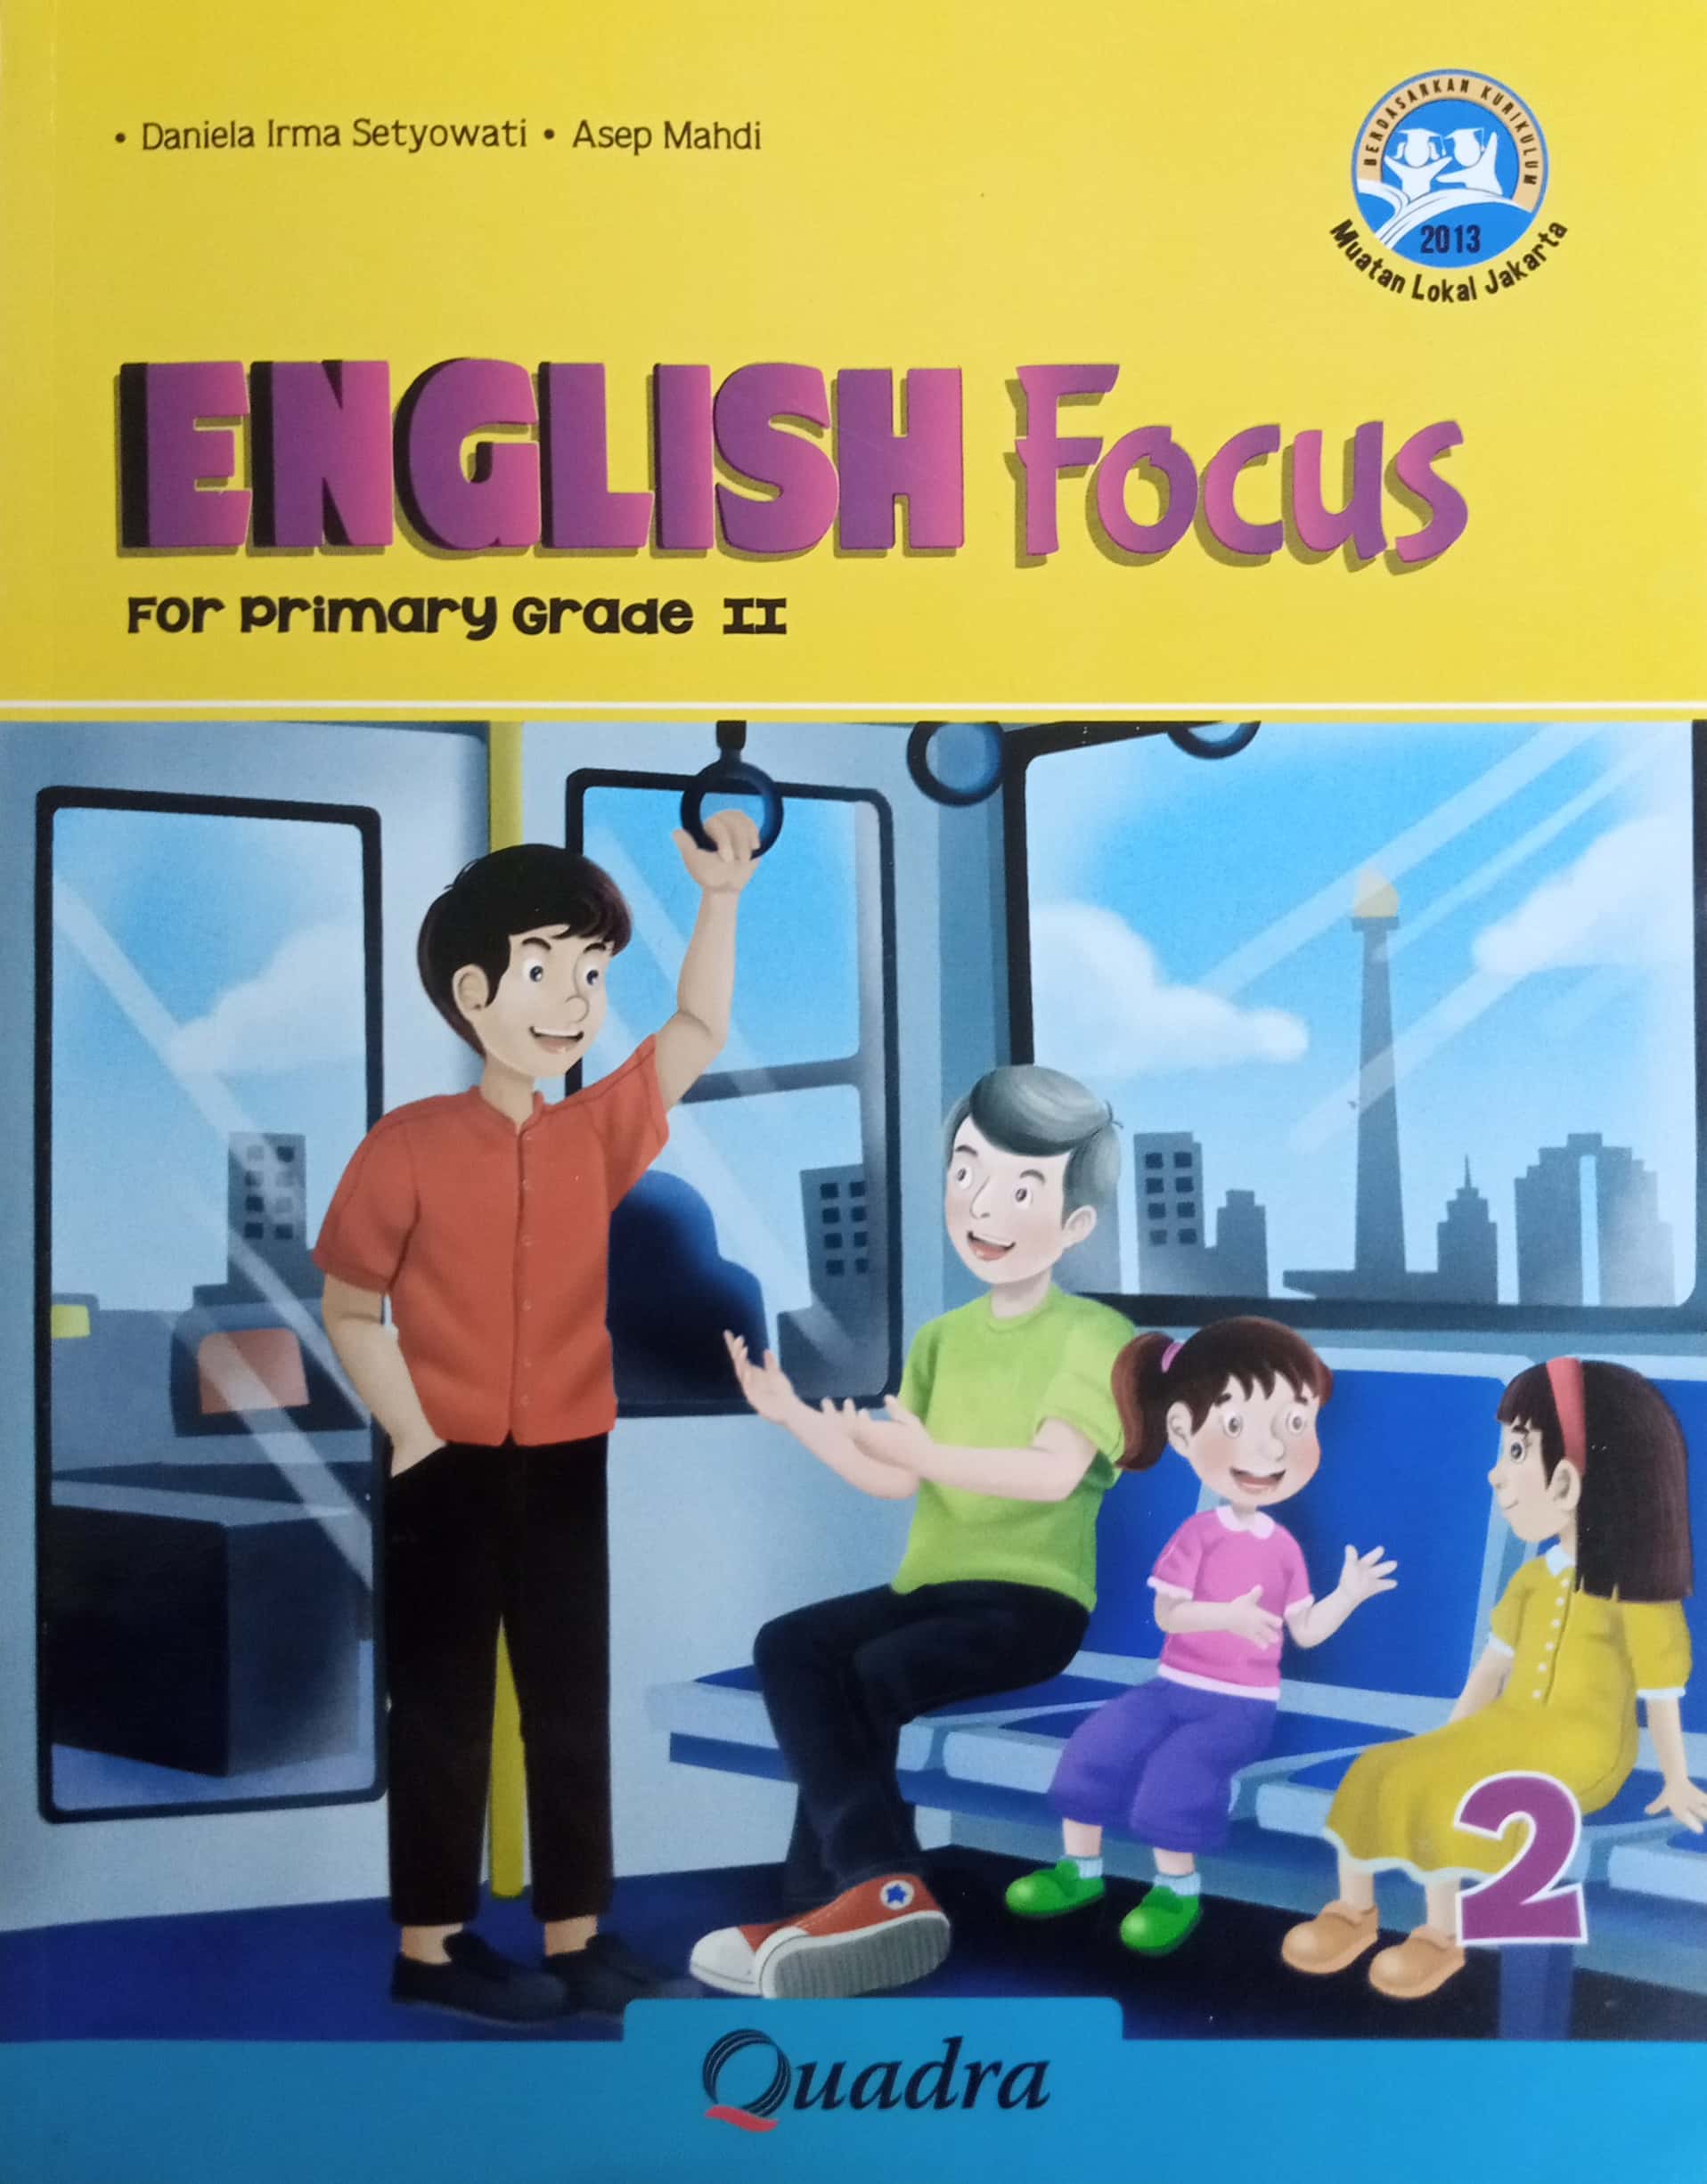 English focus for primary grade II